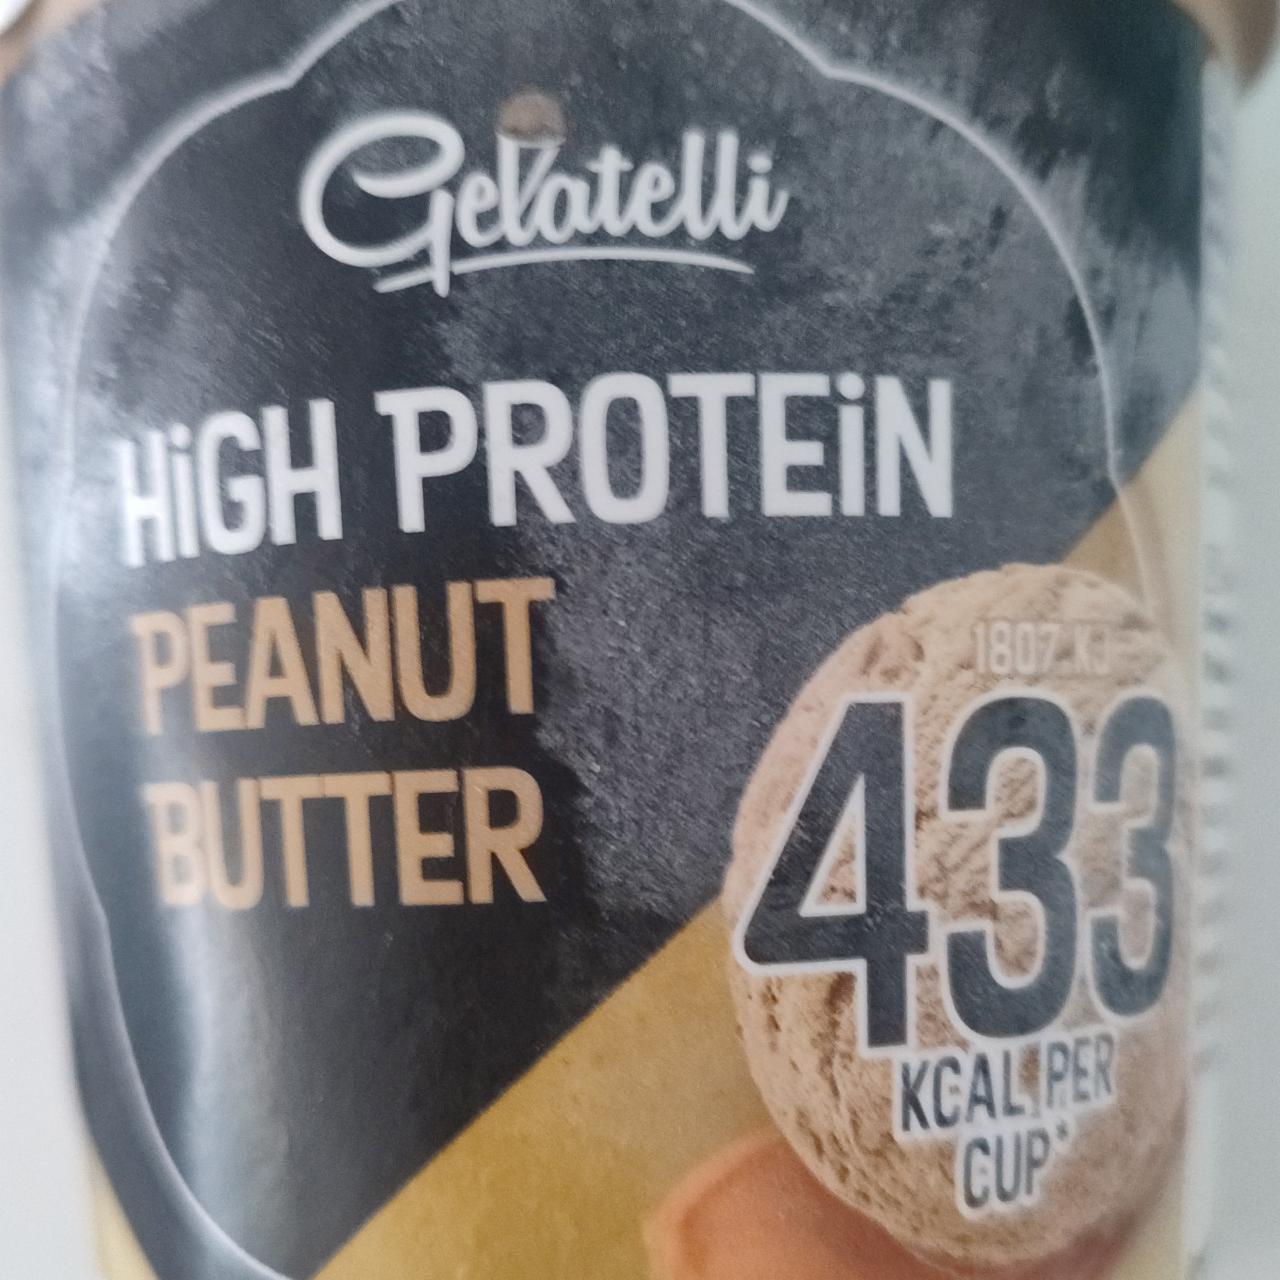 Zdjęcia - High protein peanut butter Gelatelli